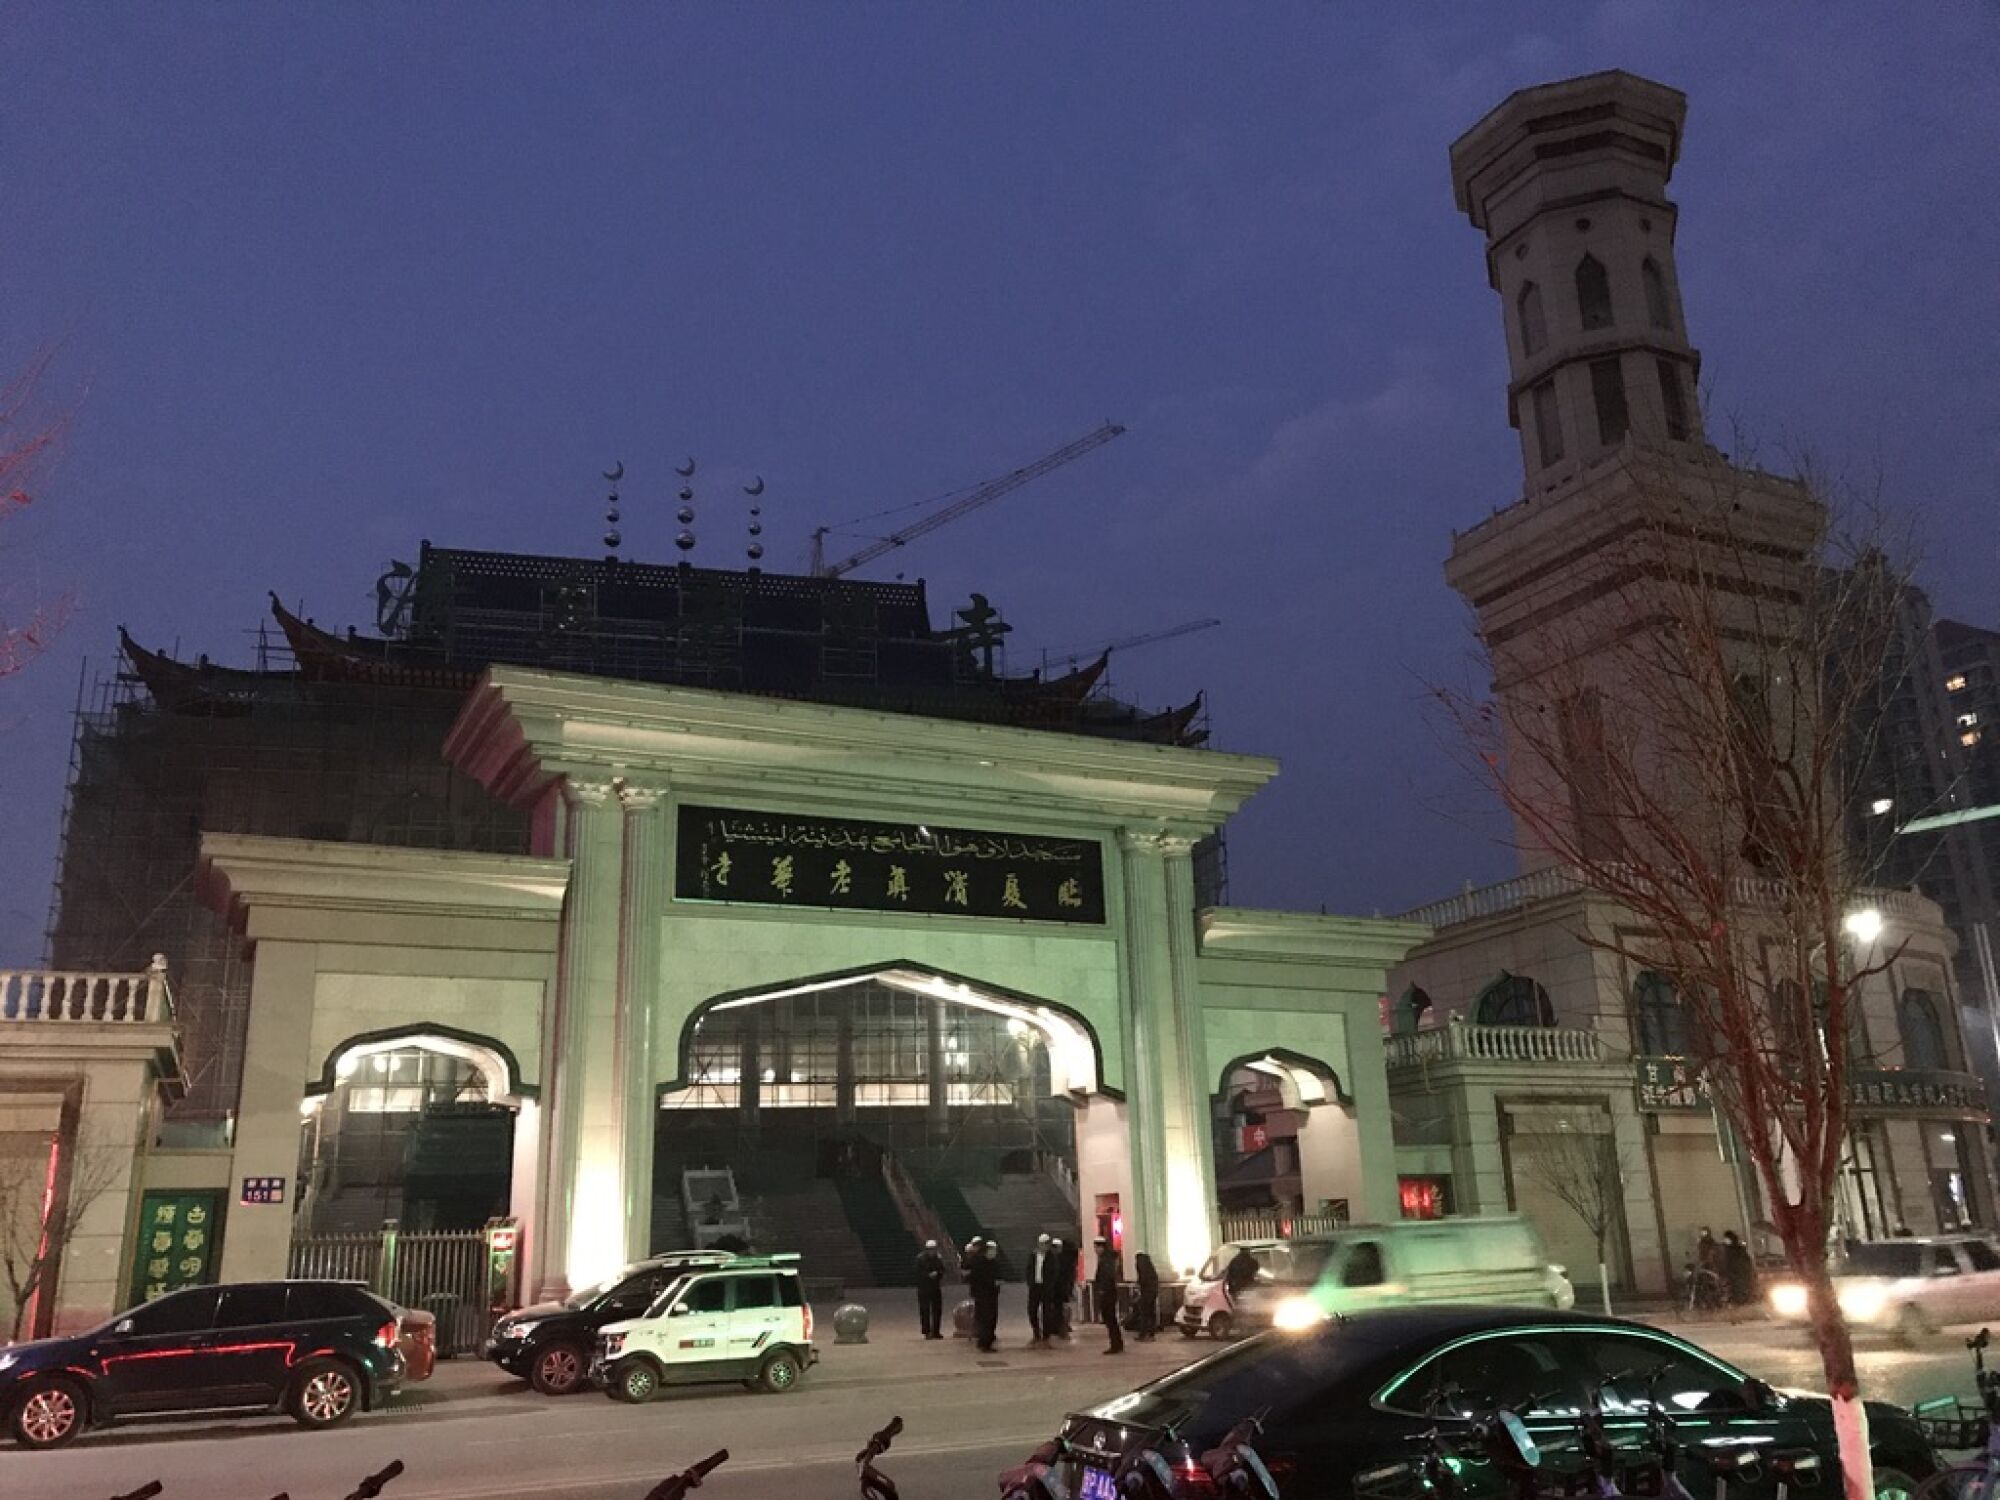 The Laohua mosque in Linxia, Gansu province, on Nov. 13, 2020.